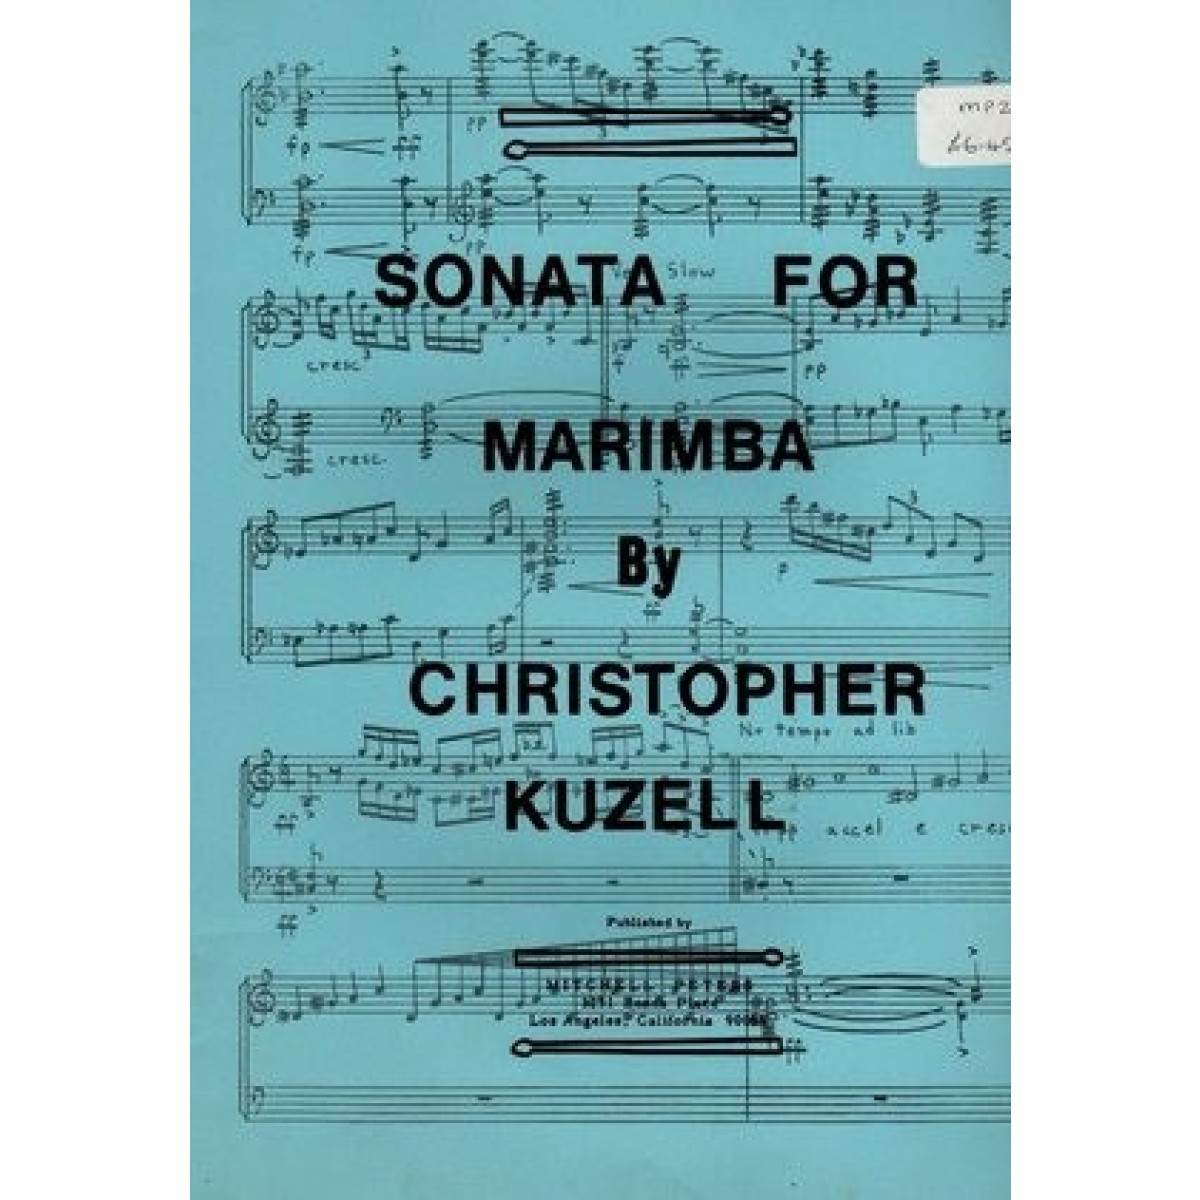 Sonata For Marimba by Christopher Kuzell